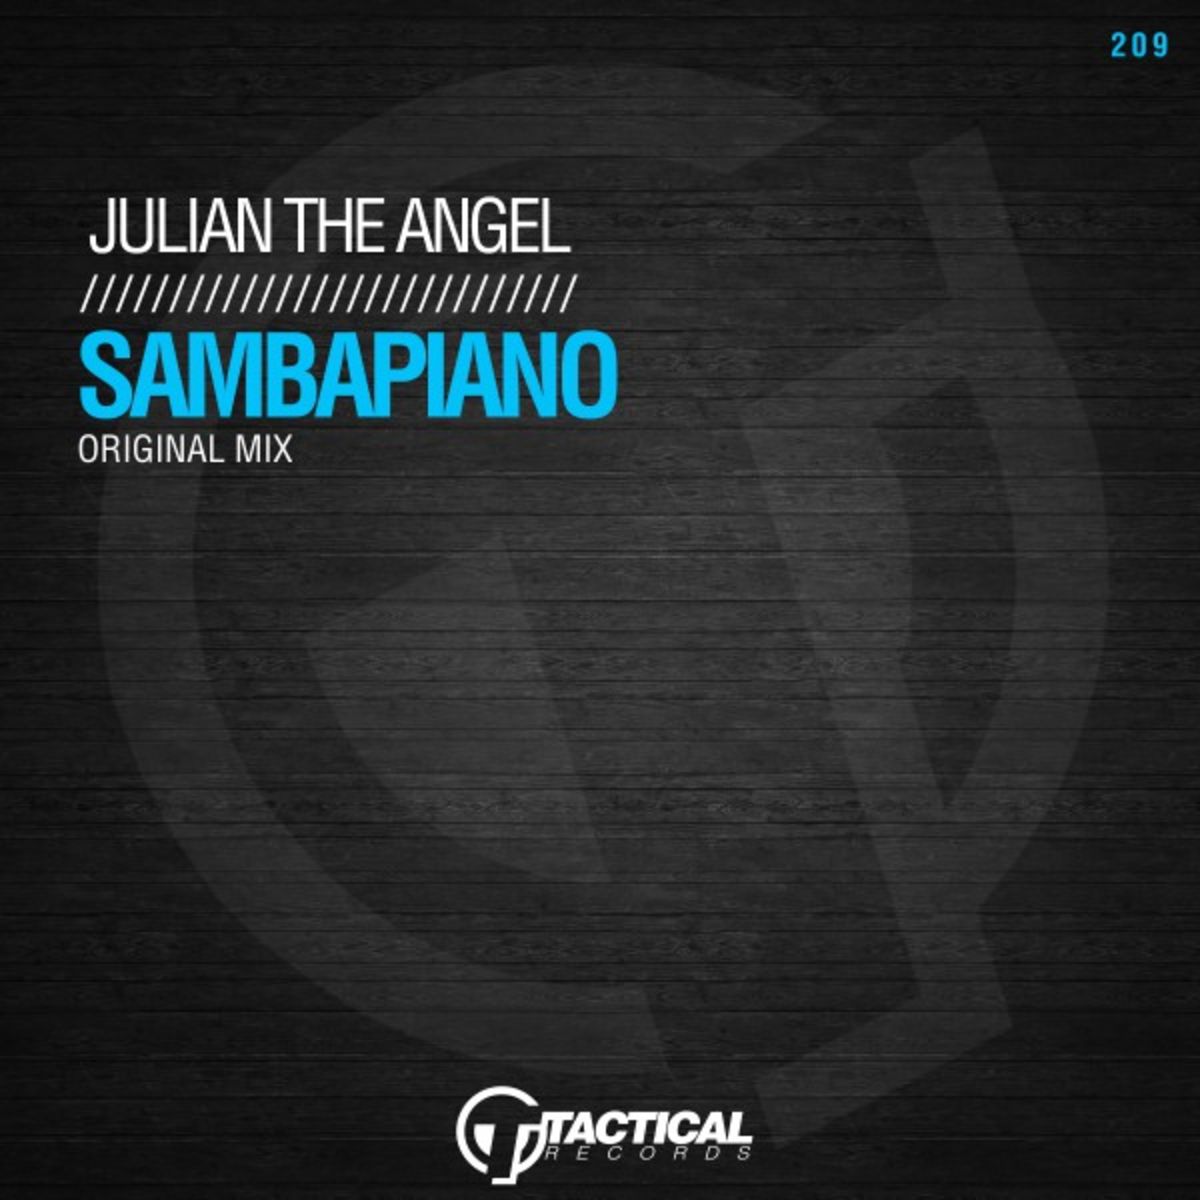 Julian The Angel - Sambapiano / Tactical Records